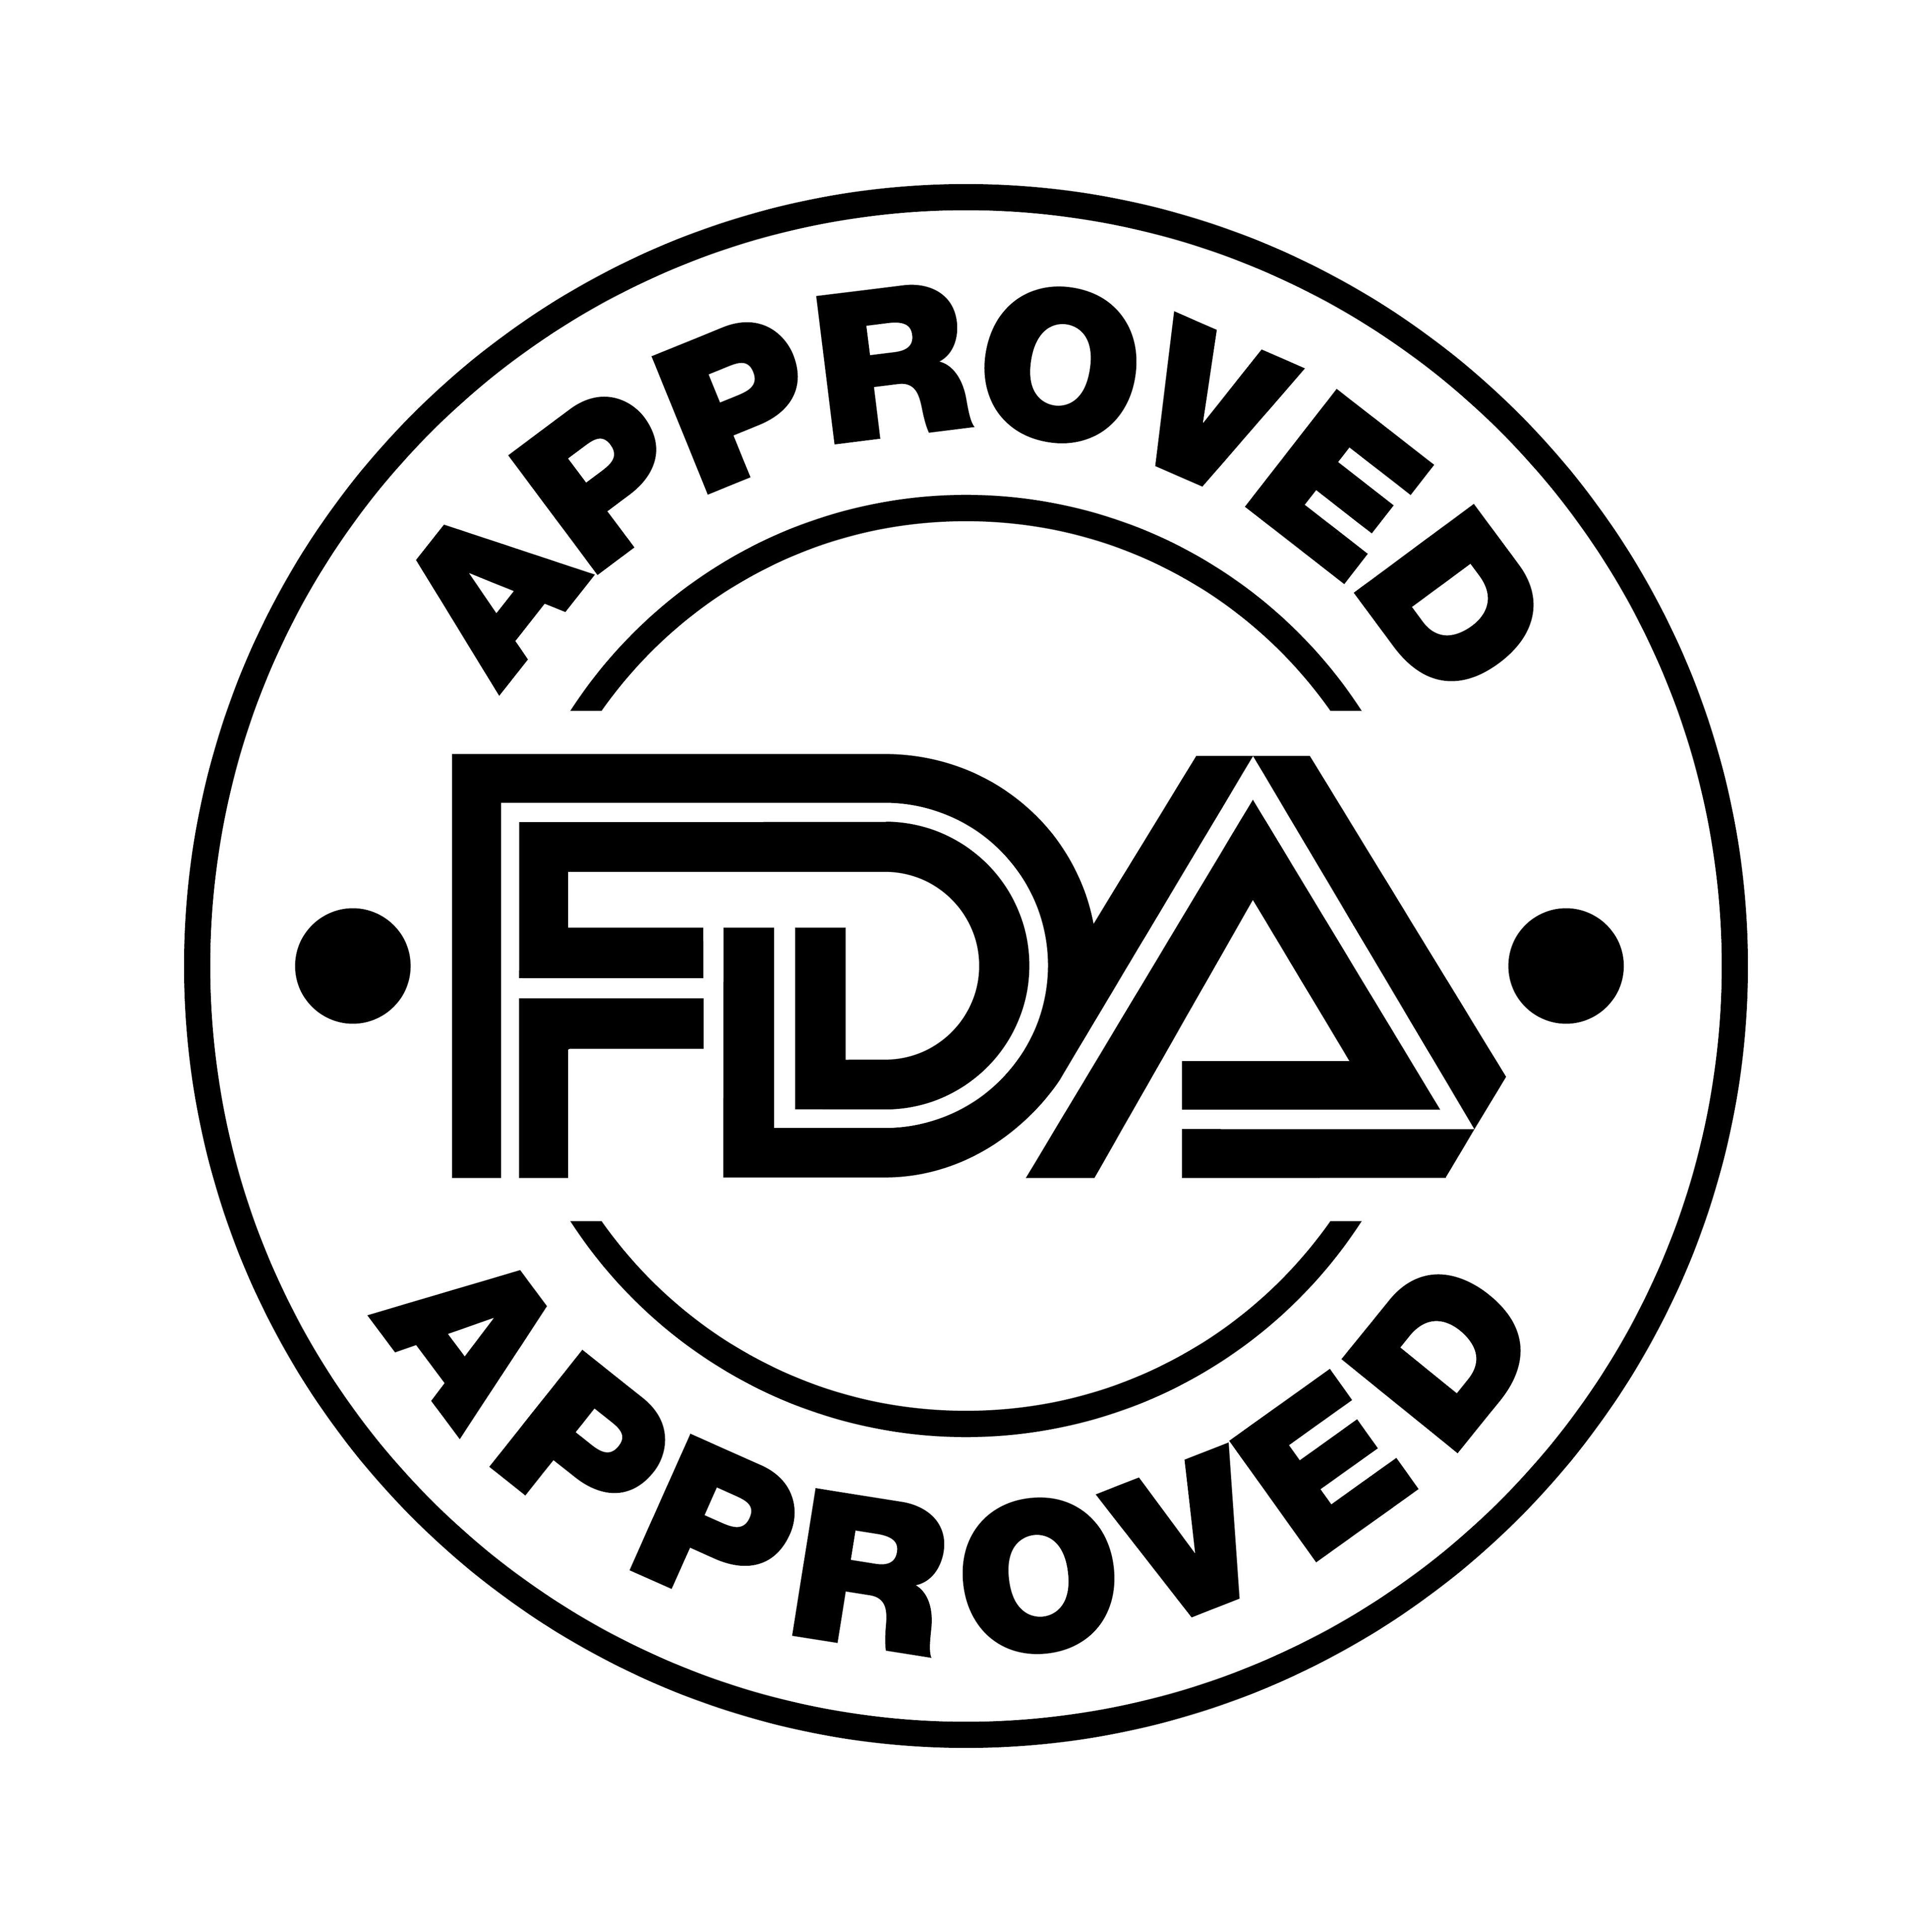 U.S. Food and Drug Administration FDA approved | Calin - stock.adobe.com